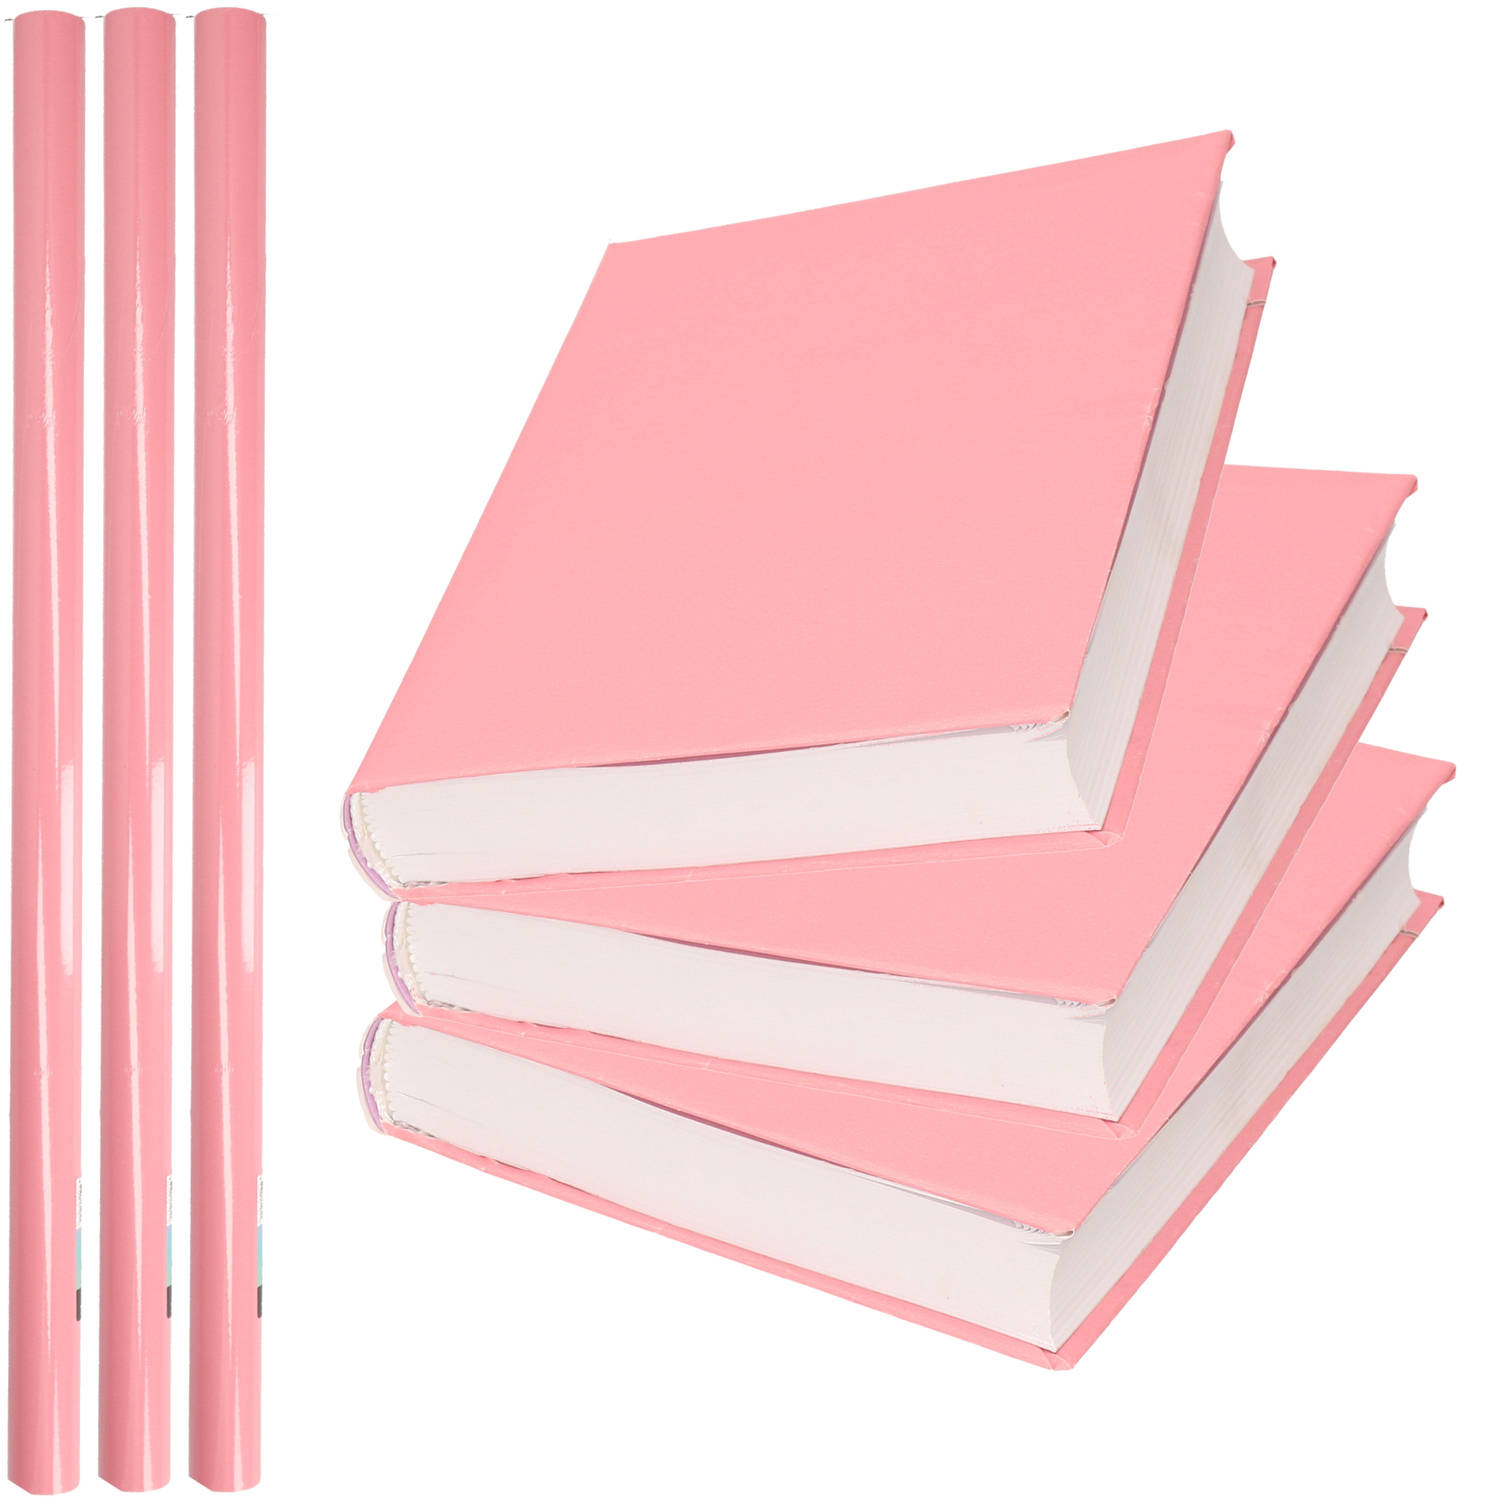 Wieg kompas Missie 3x Rollen kadopapier / schoolboeken kaftpapier pastel roze 200 x 70 cm -  Kaftpapier | Blokker